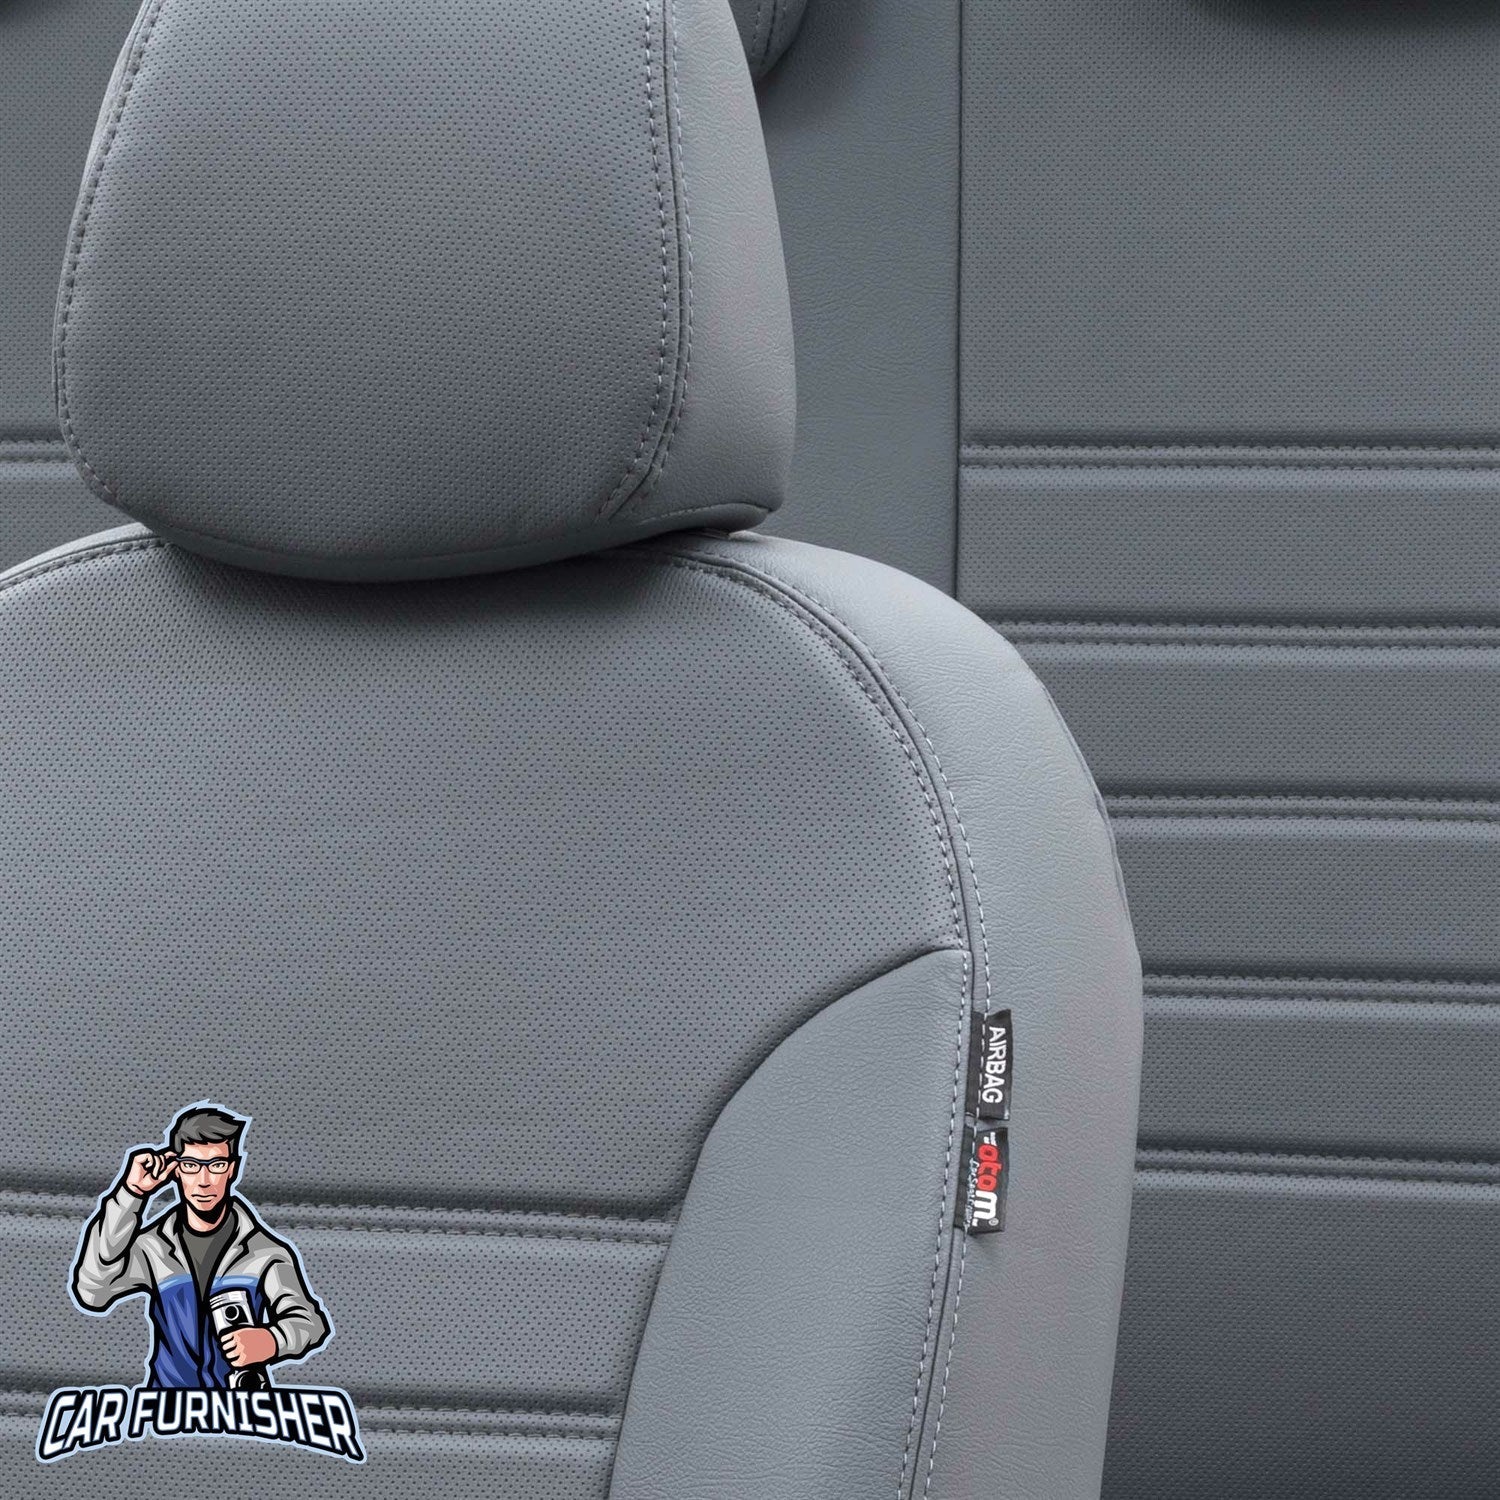 Audi Q2 Car Seat Cover 2016-2023 Custom Istanbul Design Smoked Full Set (5 Seats + Handrest) Leather & Fabric